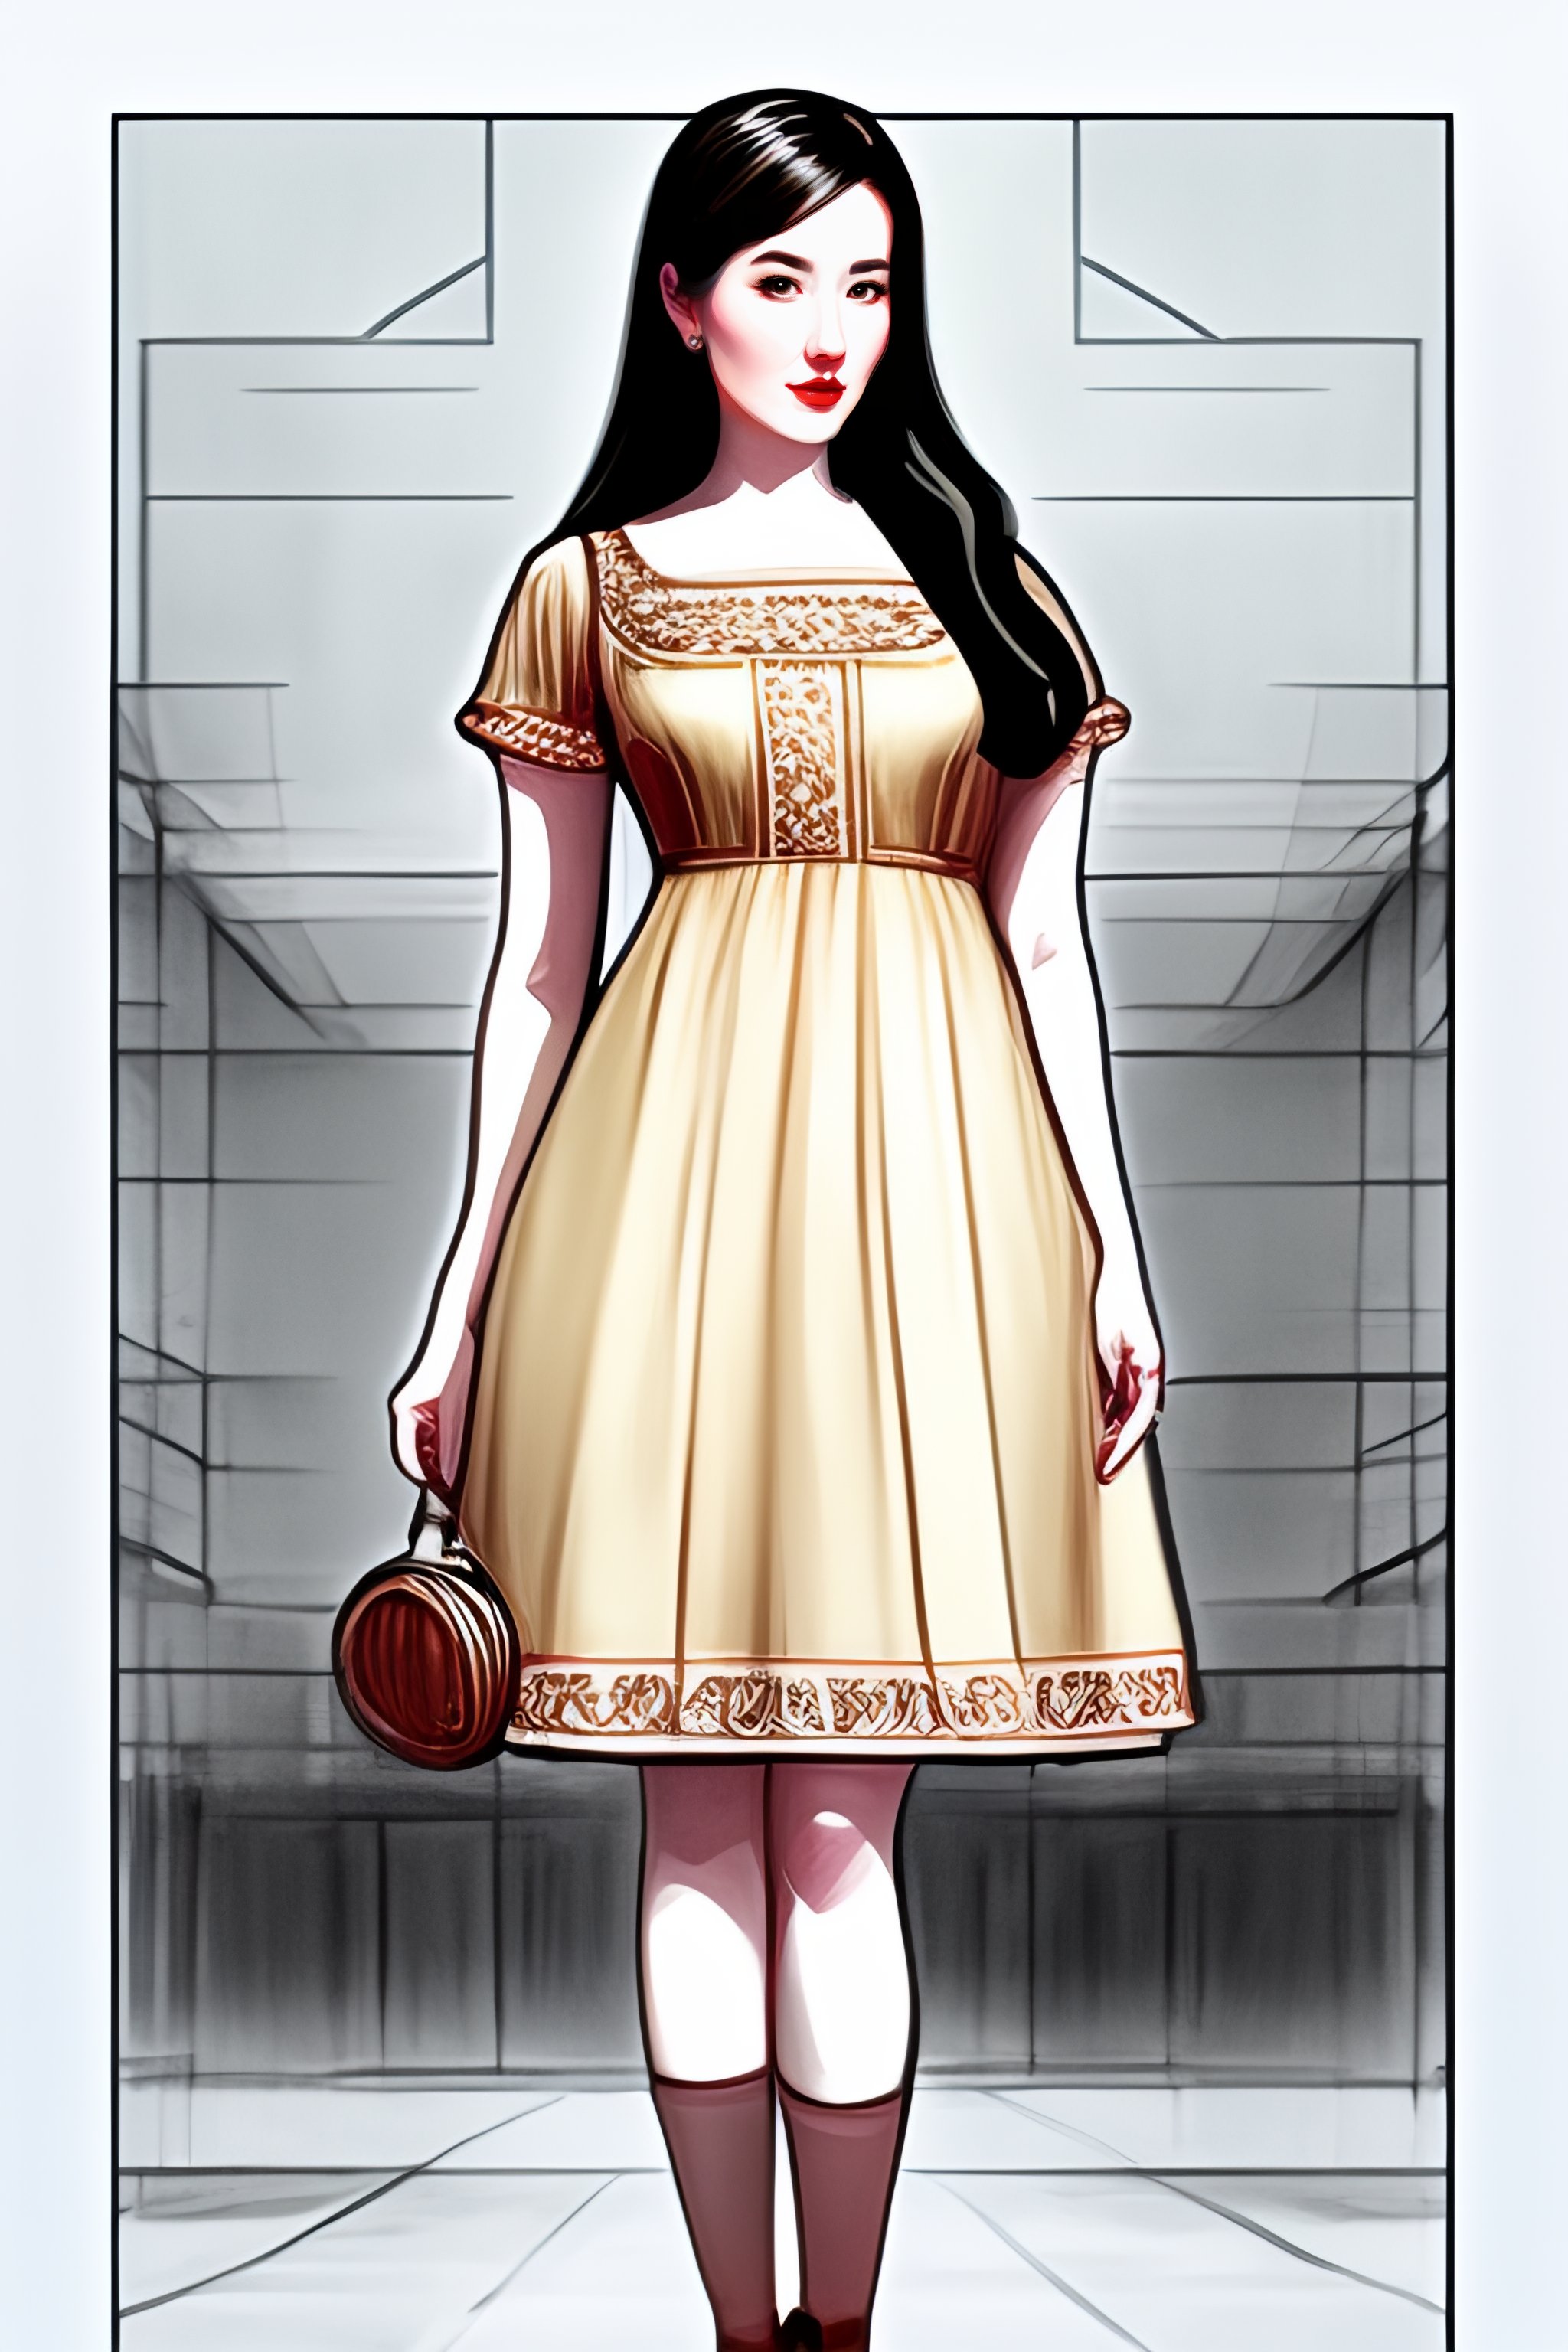 Girl Anime Character in Dress Portrait Stock Illustration - Illustration of  drawing, dancer: 183786167